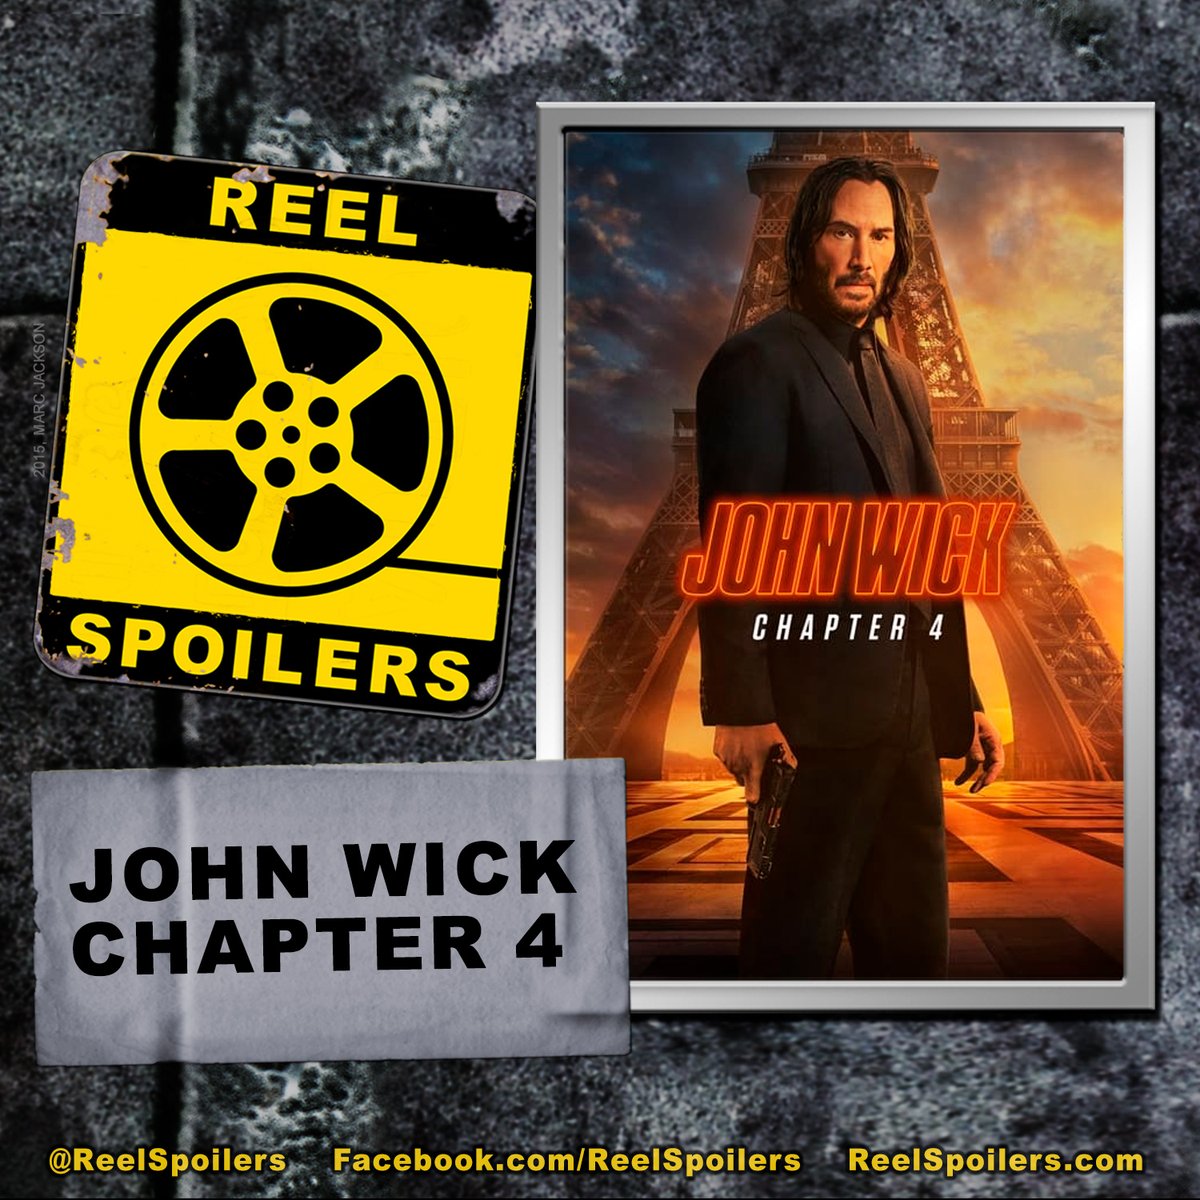 New on @ReelSpoilers, we're joined by @PaulHarrisShow to discuss #JohnWick Chapter 4. Have you seen it? #FilmTwitter #JohnWick4 LISTEN: bit.ly/johnwick4pod WATCH: bit.ly/SpoilersJW4